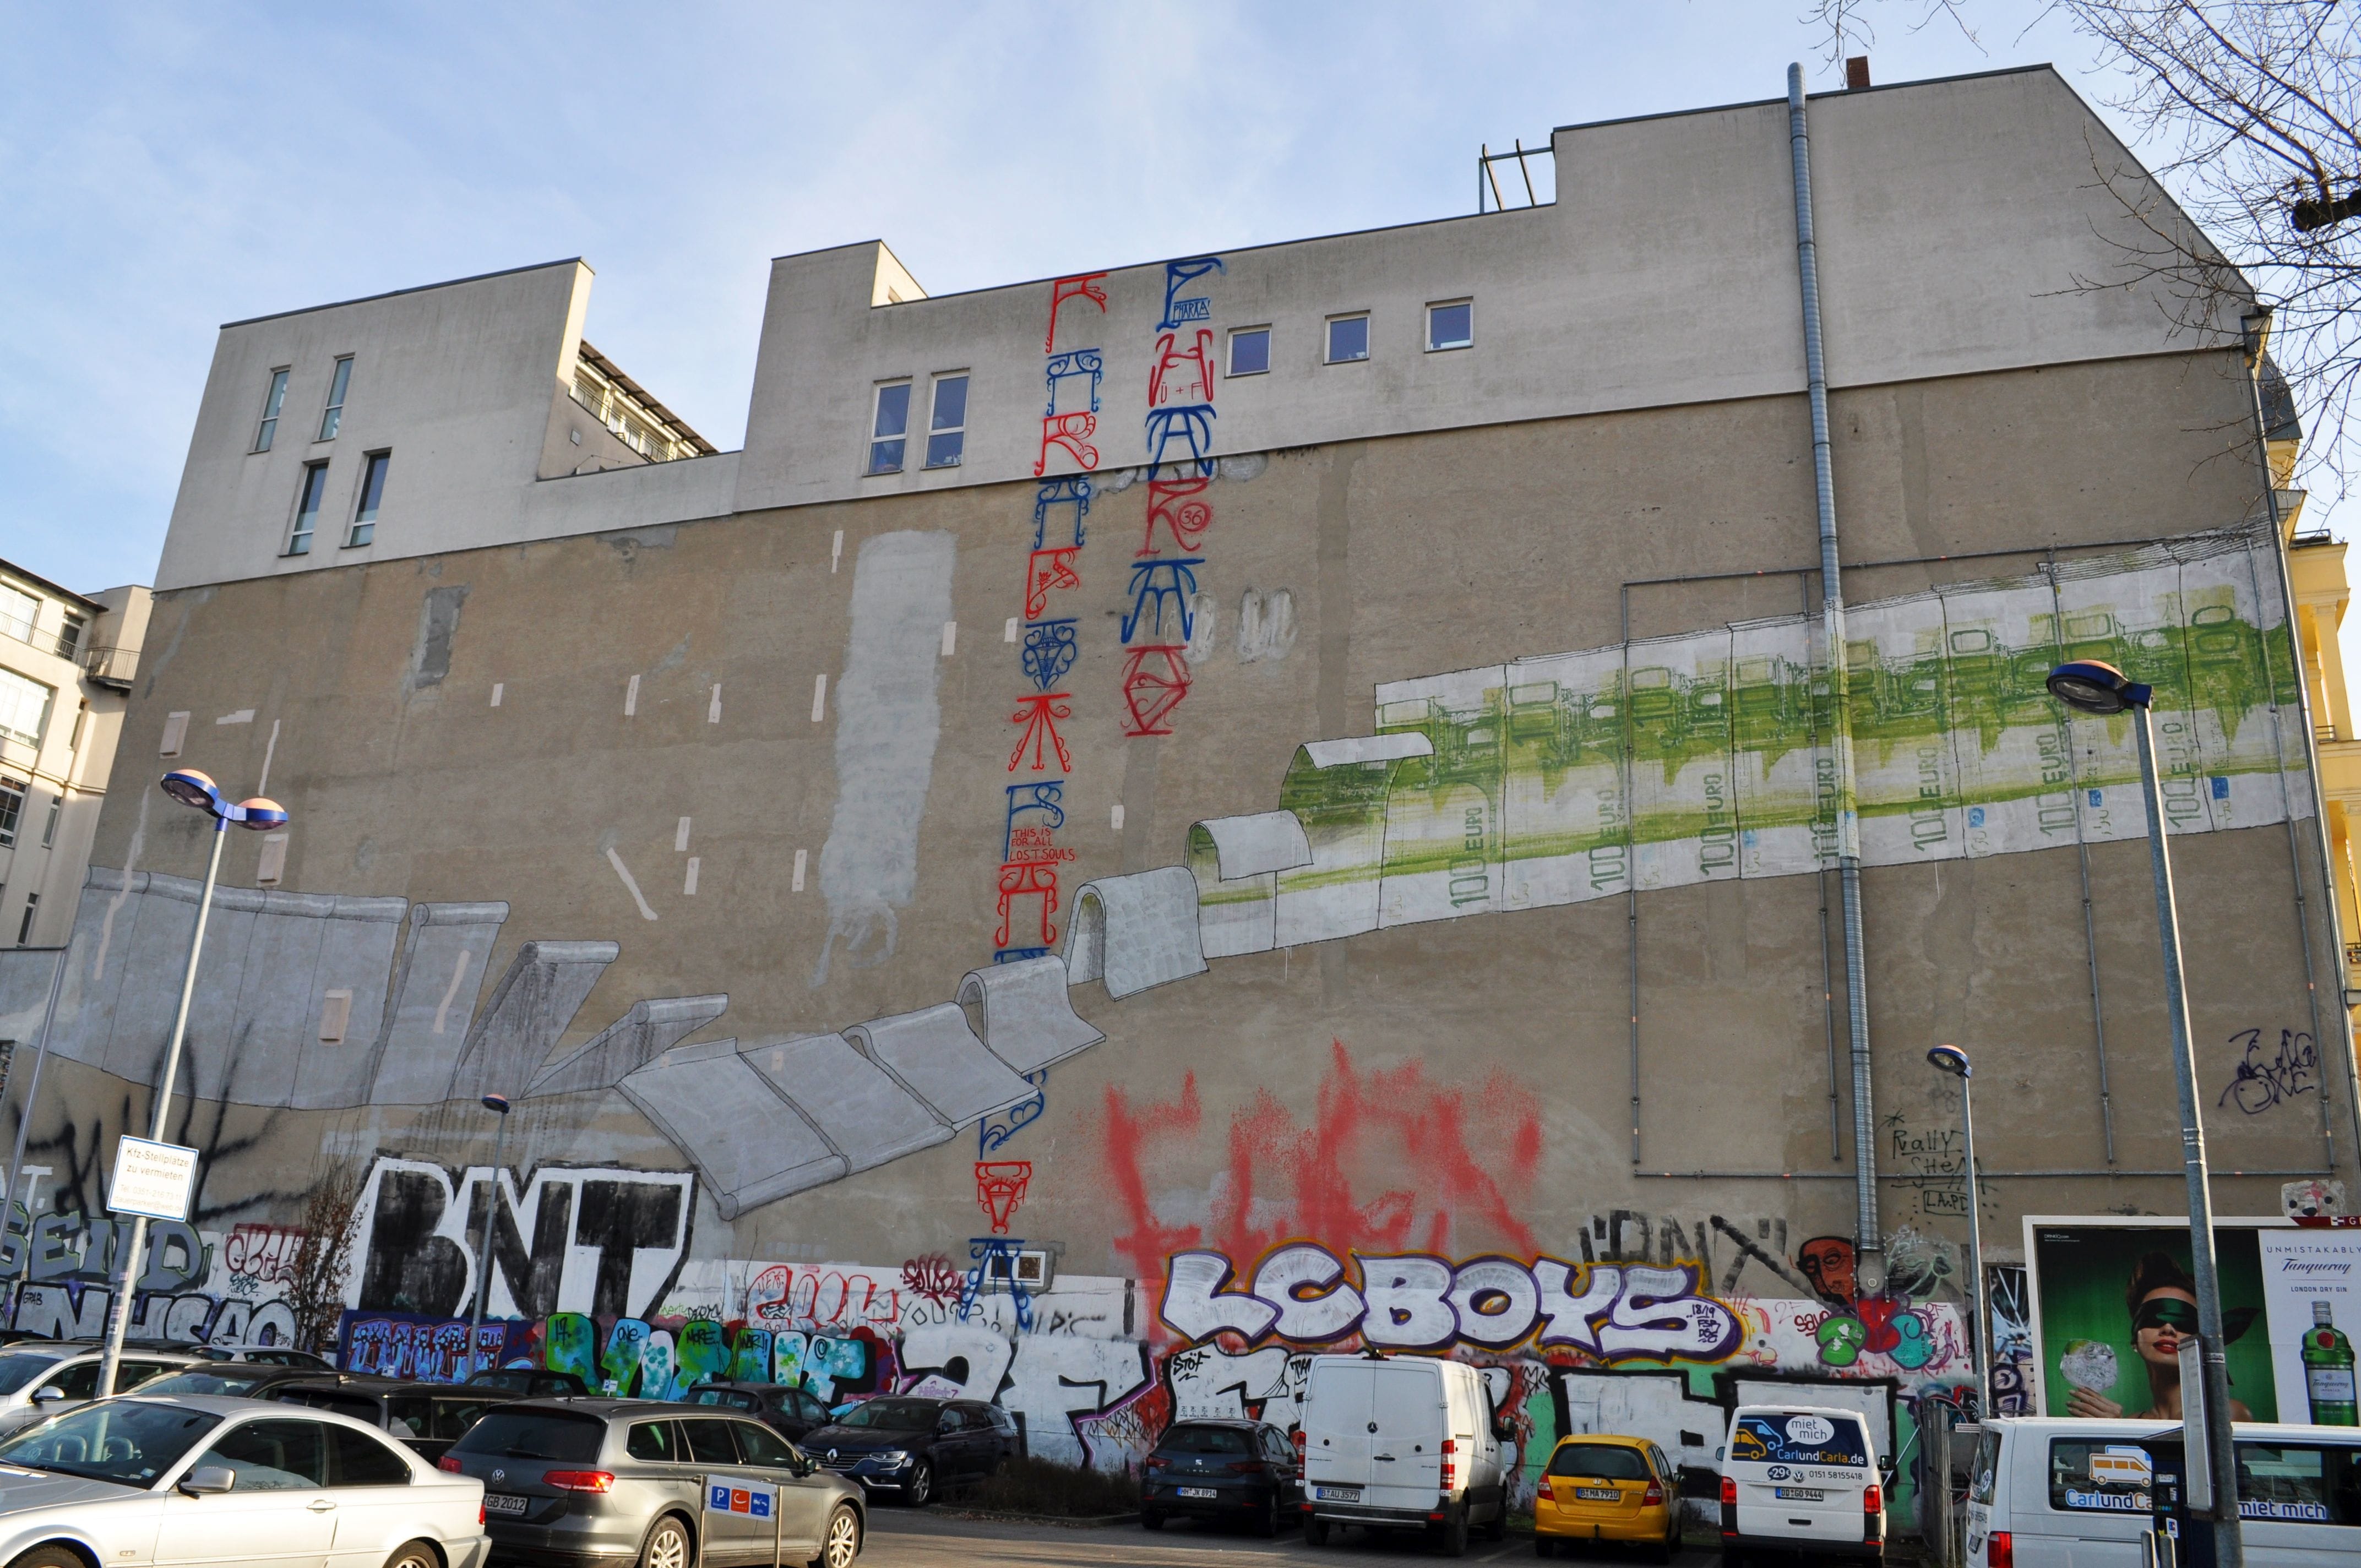 Graffiti 4660 € Wall de Blu capturé par elettrotajik à Berlin Germany